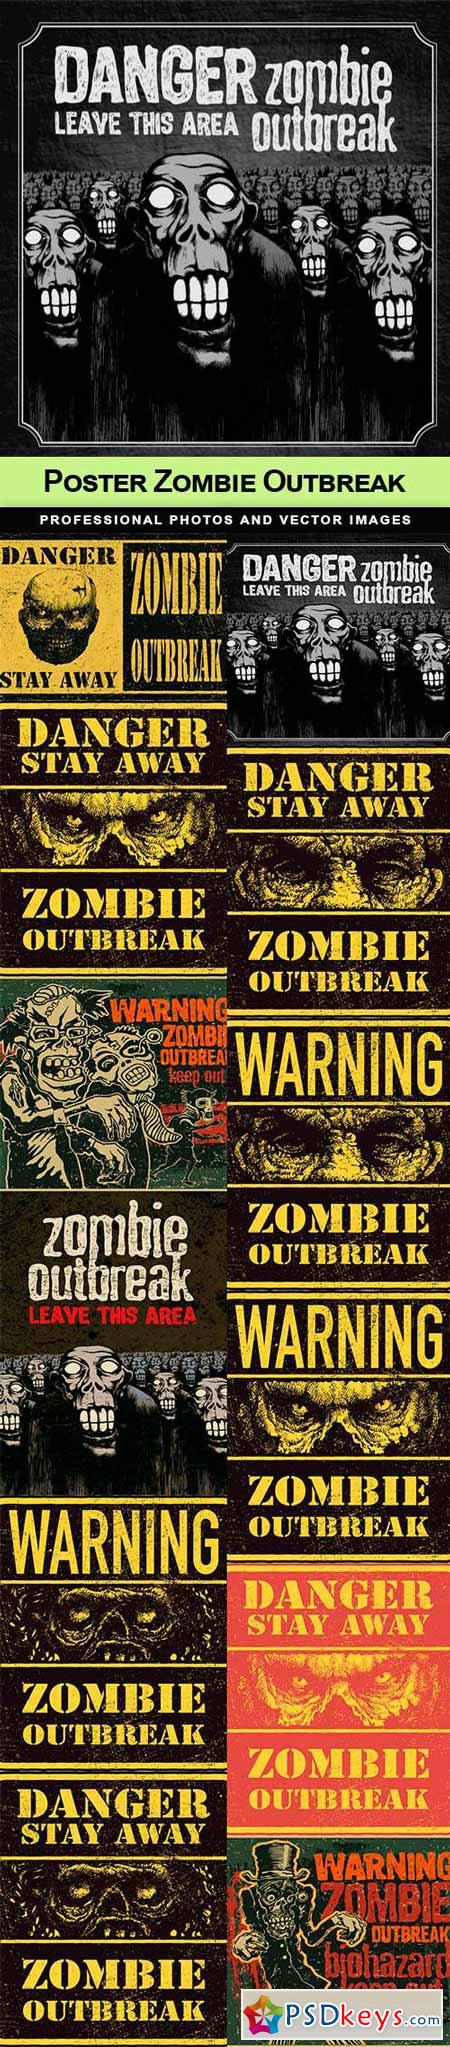 1443141115_poster-zombie-outbreak-12-eps.jpg